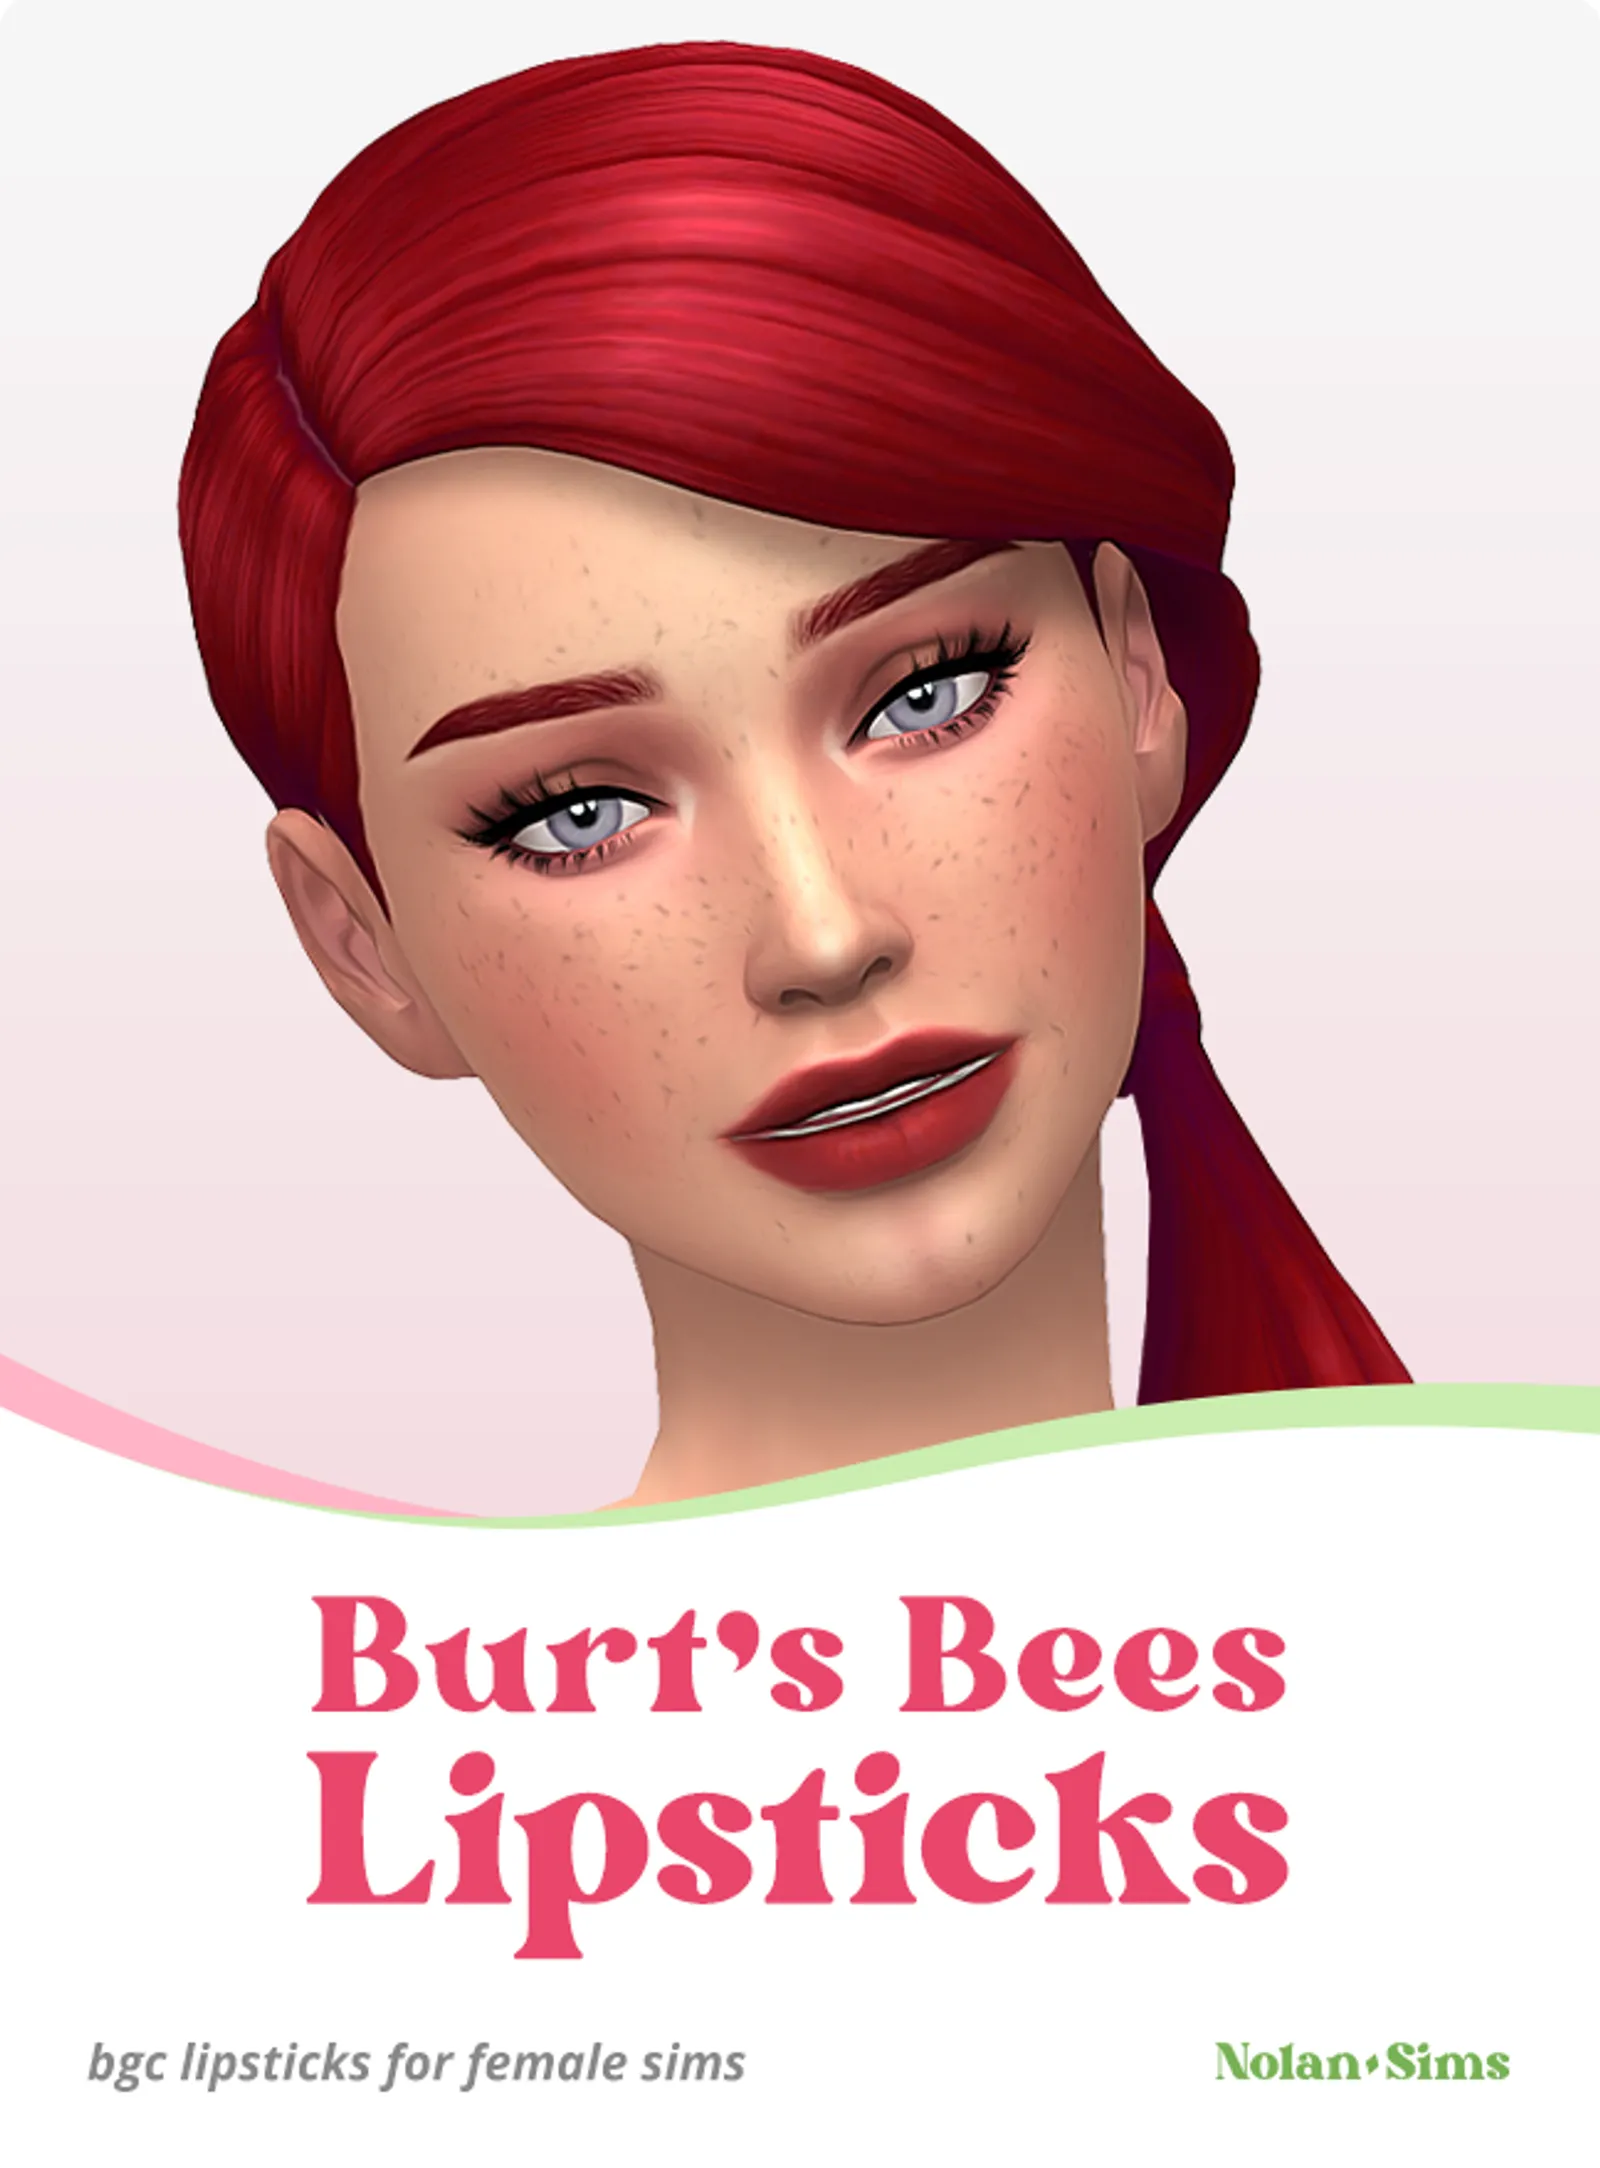 Burt's Bees Lipsticks